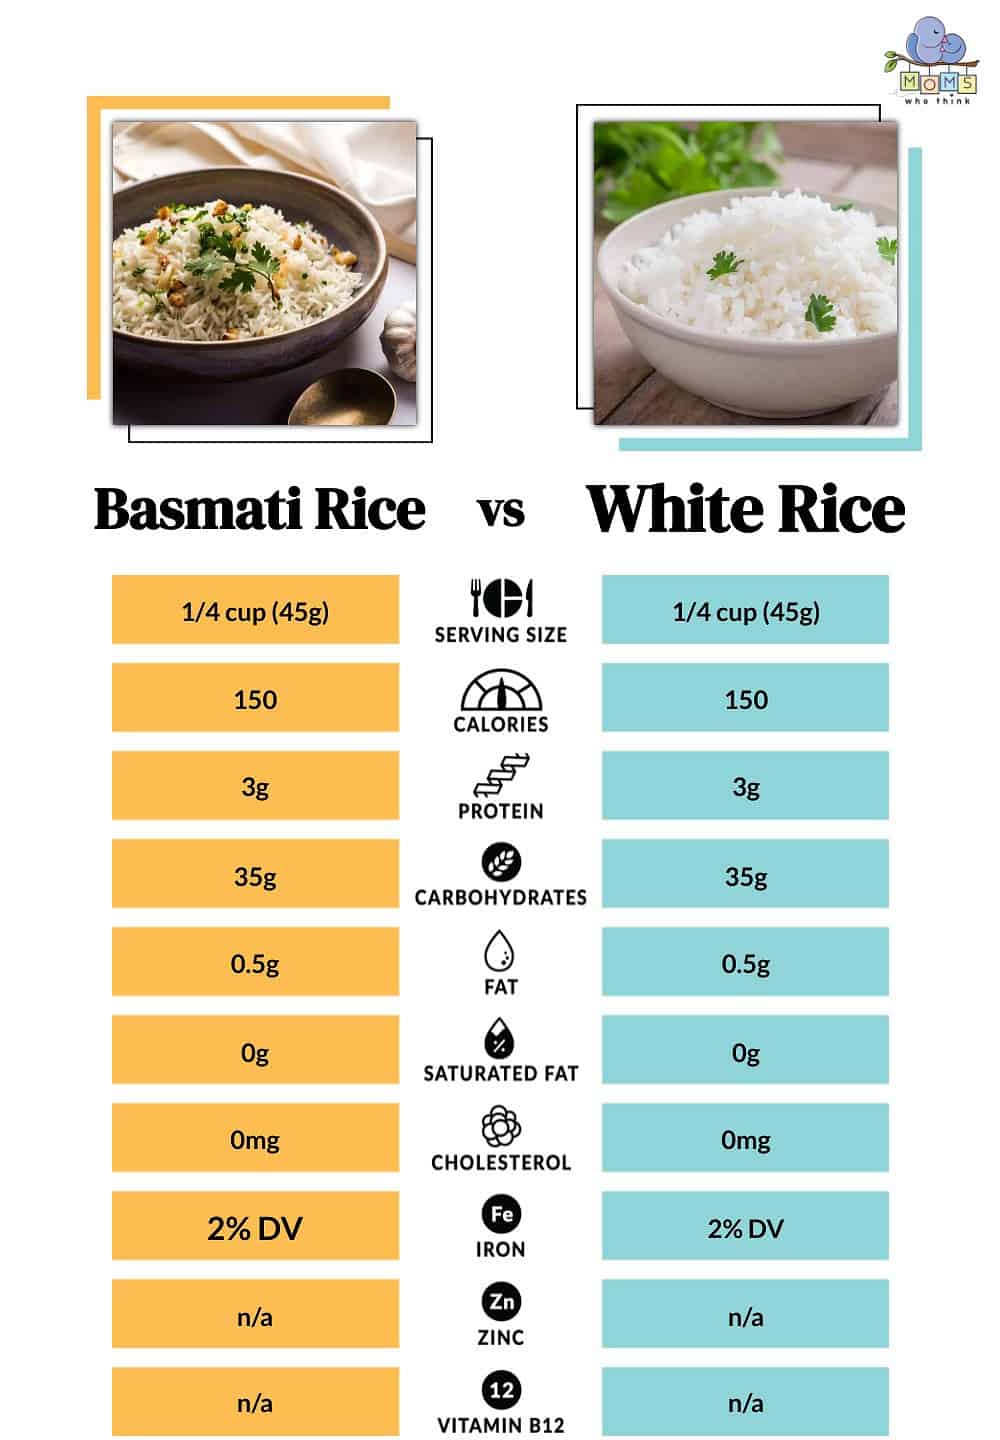 Basmati Rice vs White Rice Nutritional Facts